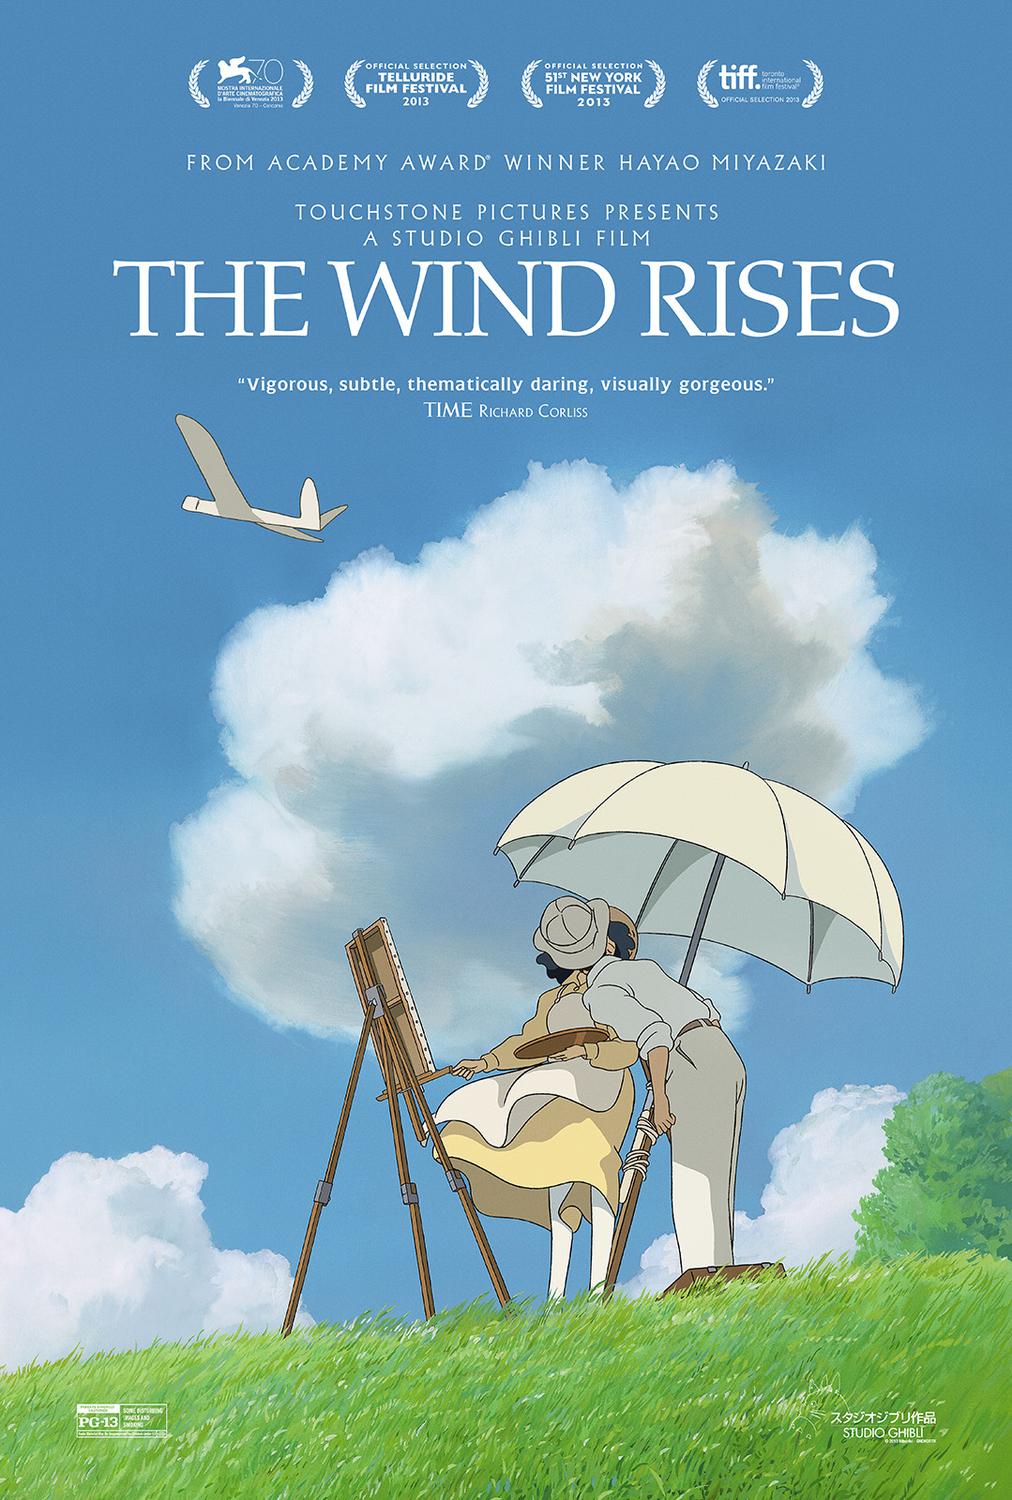 How Do You Live?: Hayao Miyazaki's final Studio Ghibli film is coming